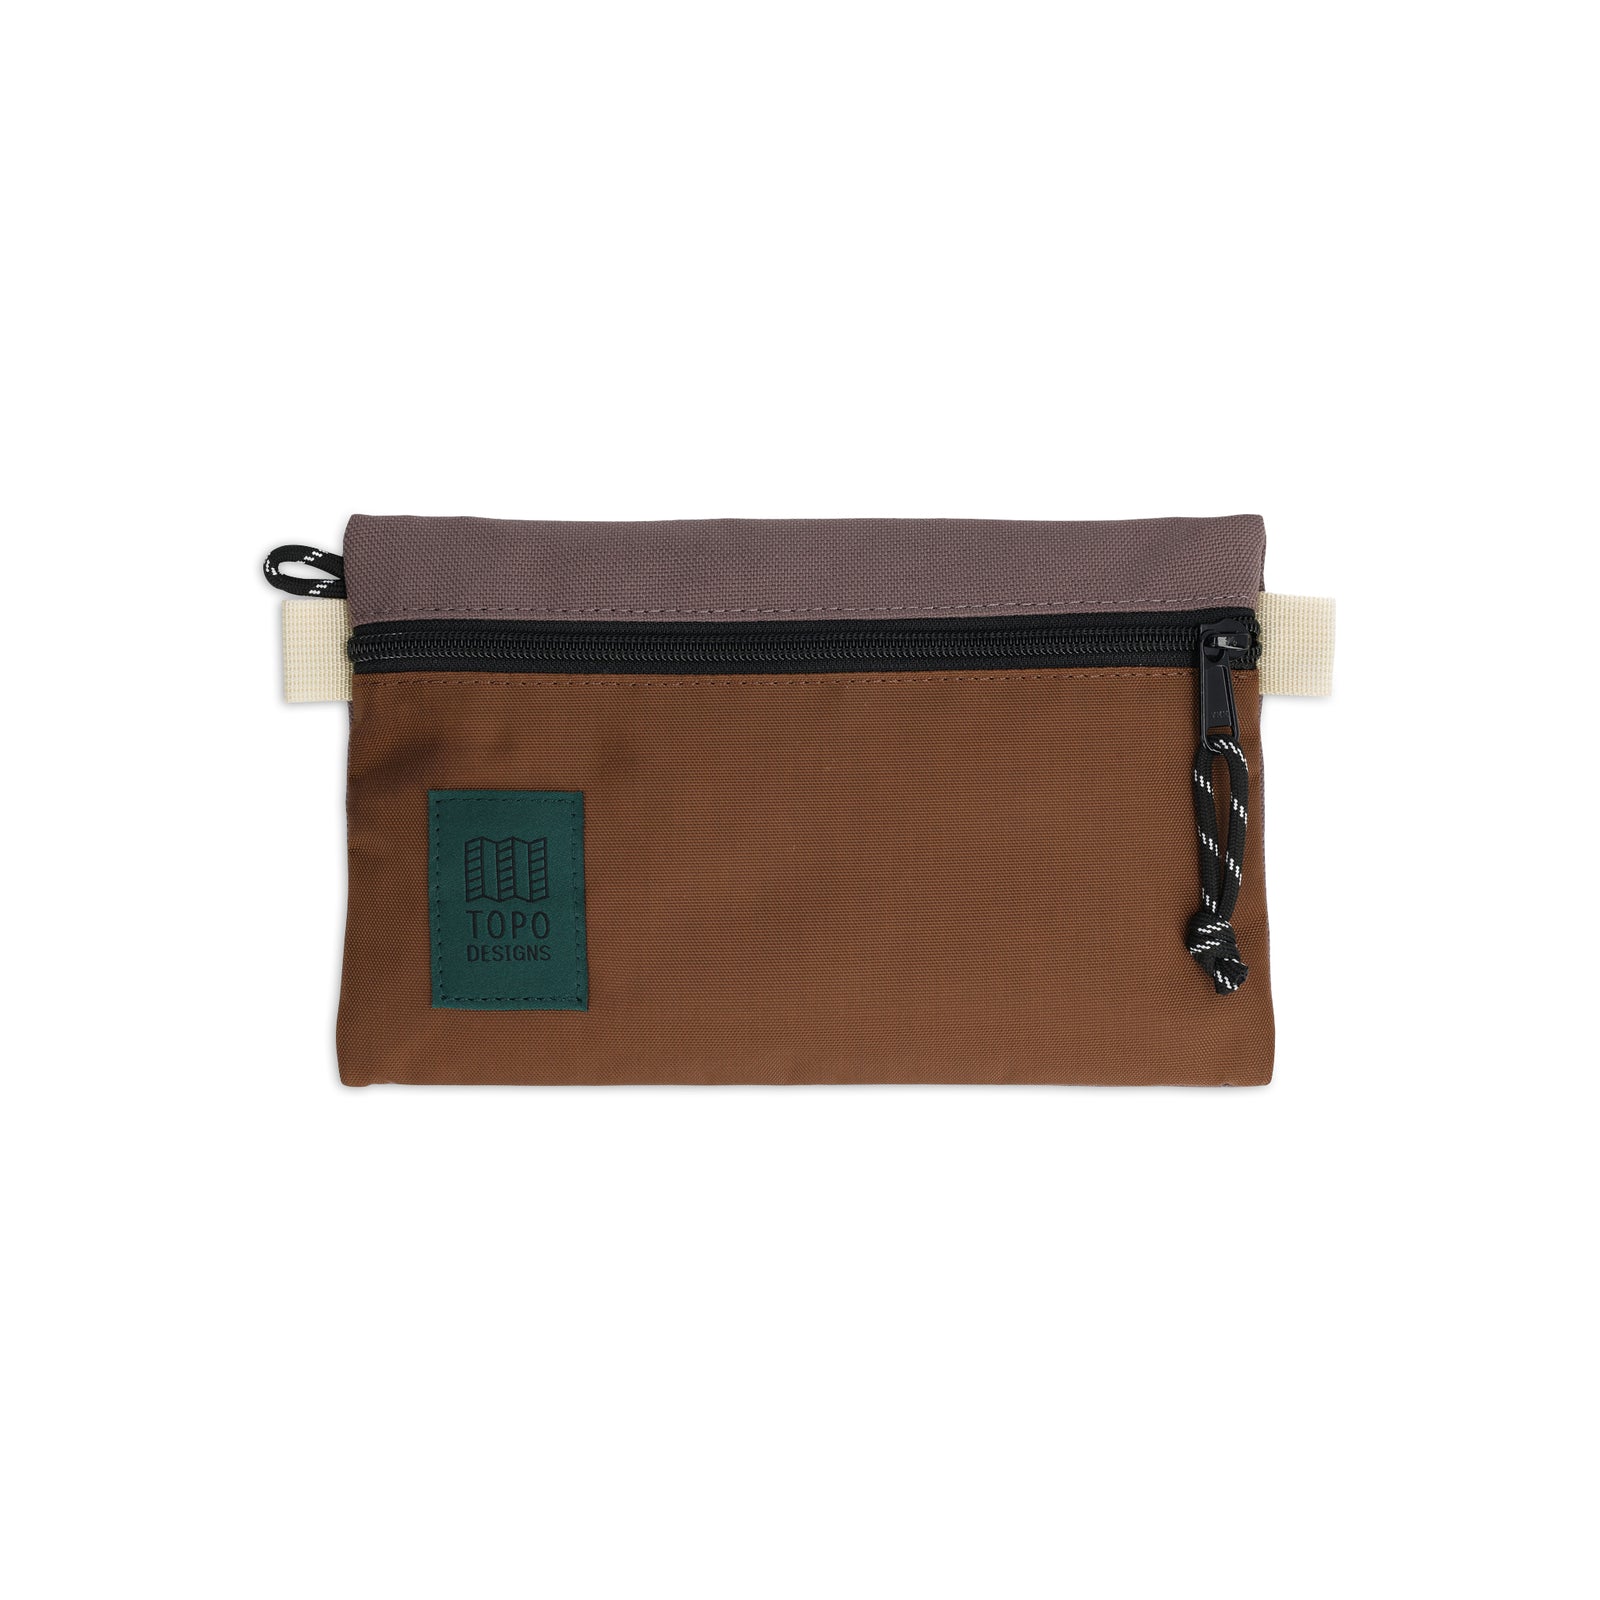 Topo Designs Accessory Bag in "Small" "Peppercorn / Cocoa - Recycled"